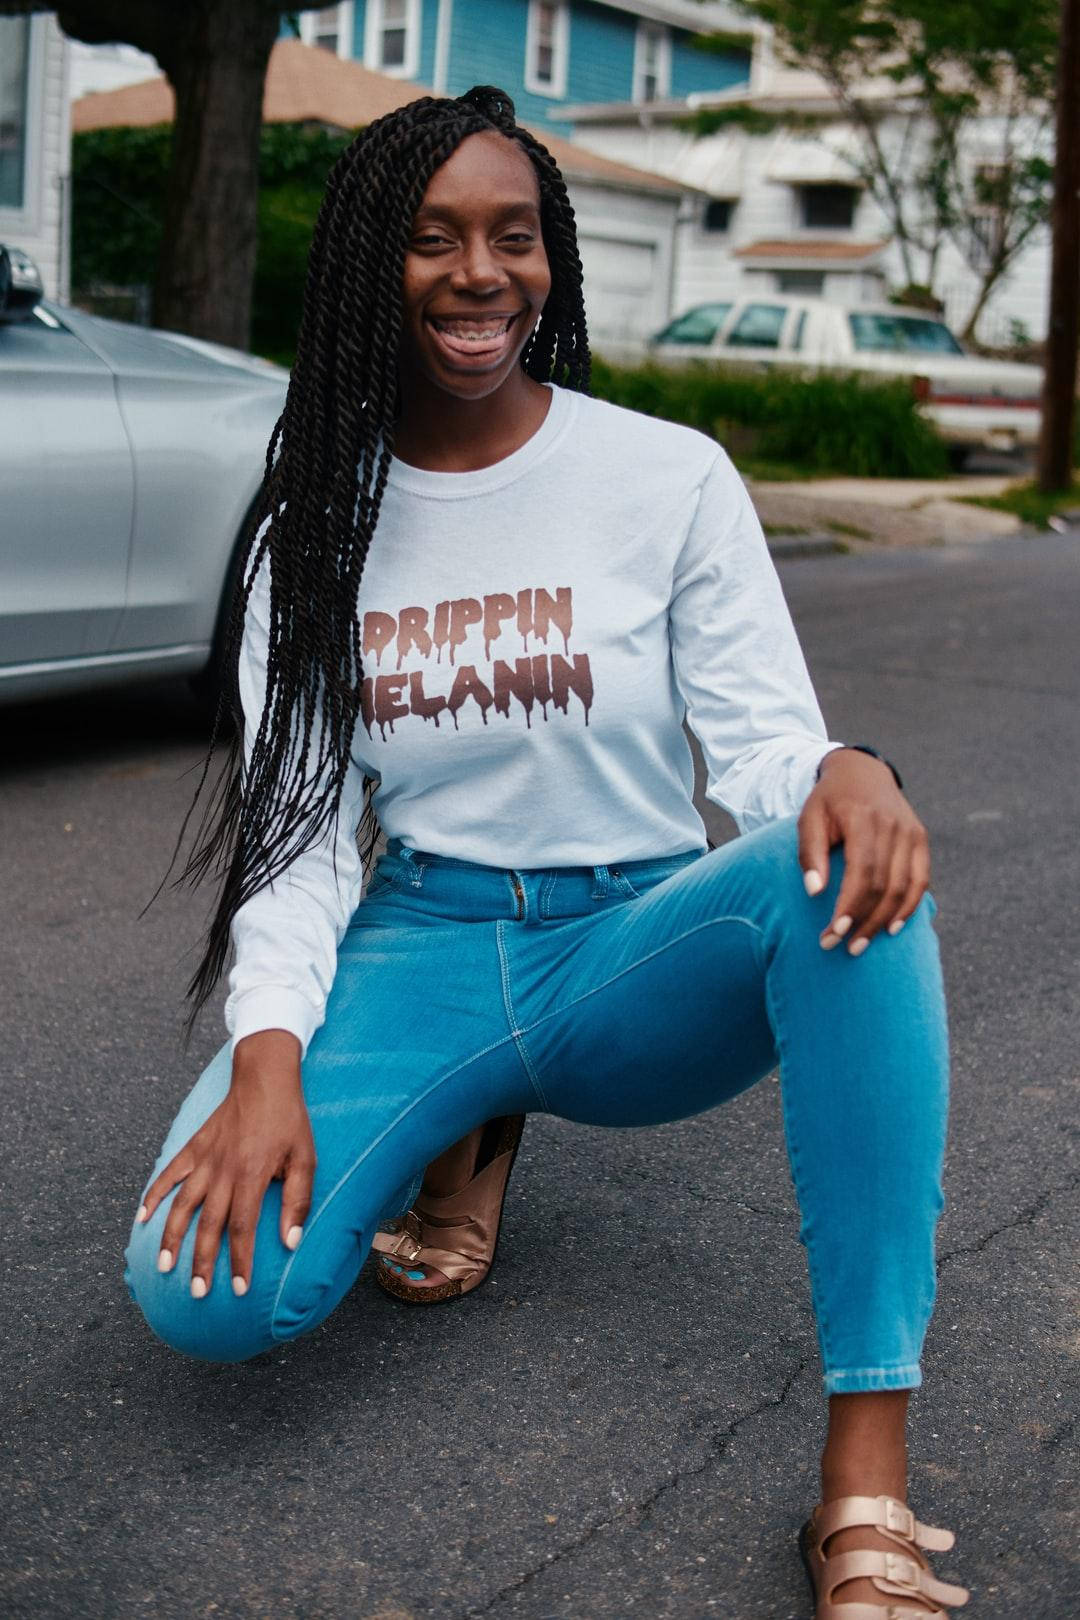 Black Girl Baddie With Drippin' Melanin Shirt Wallpaper